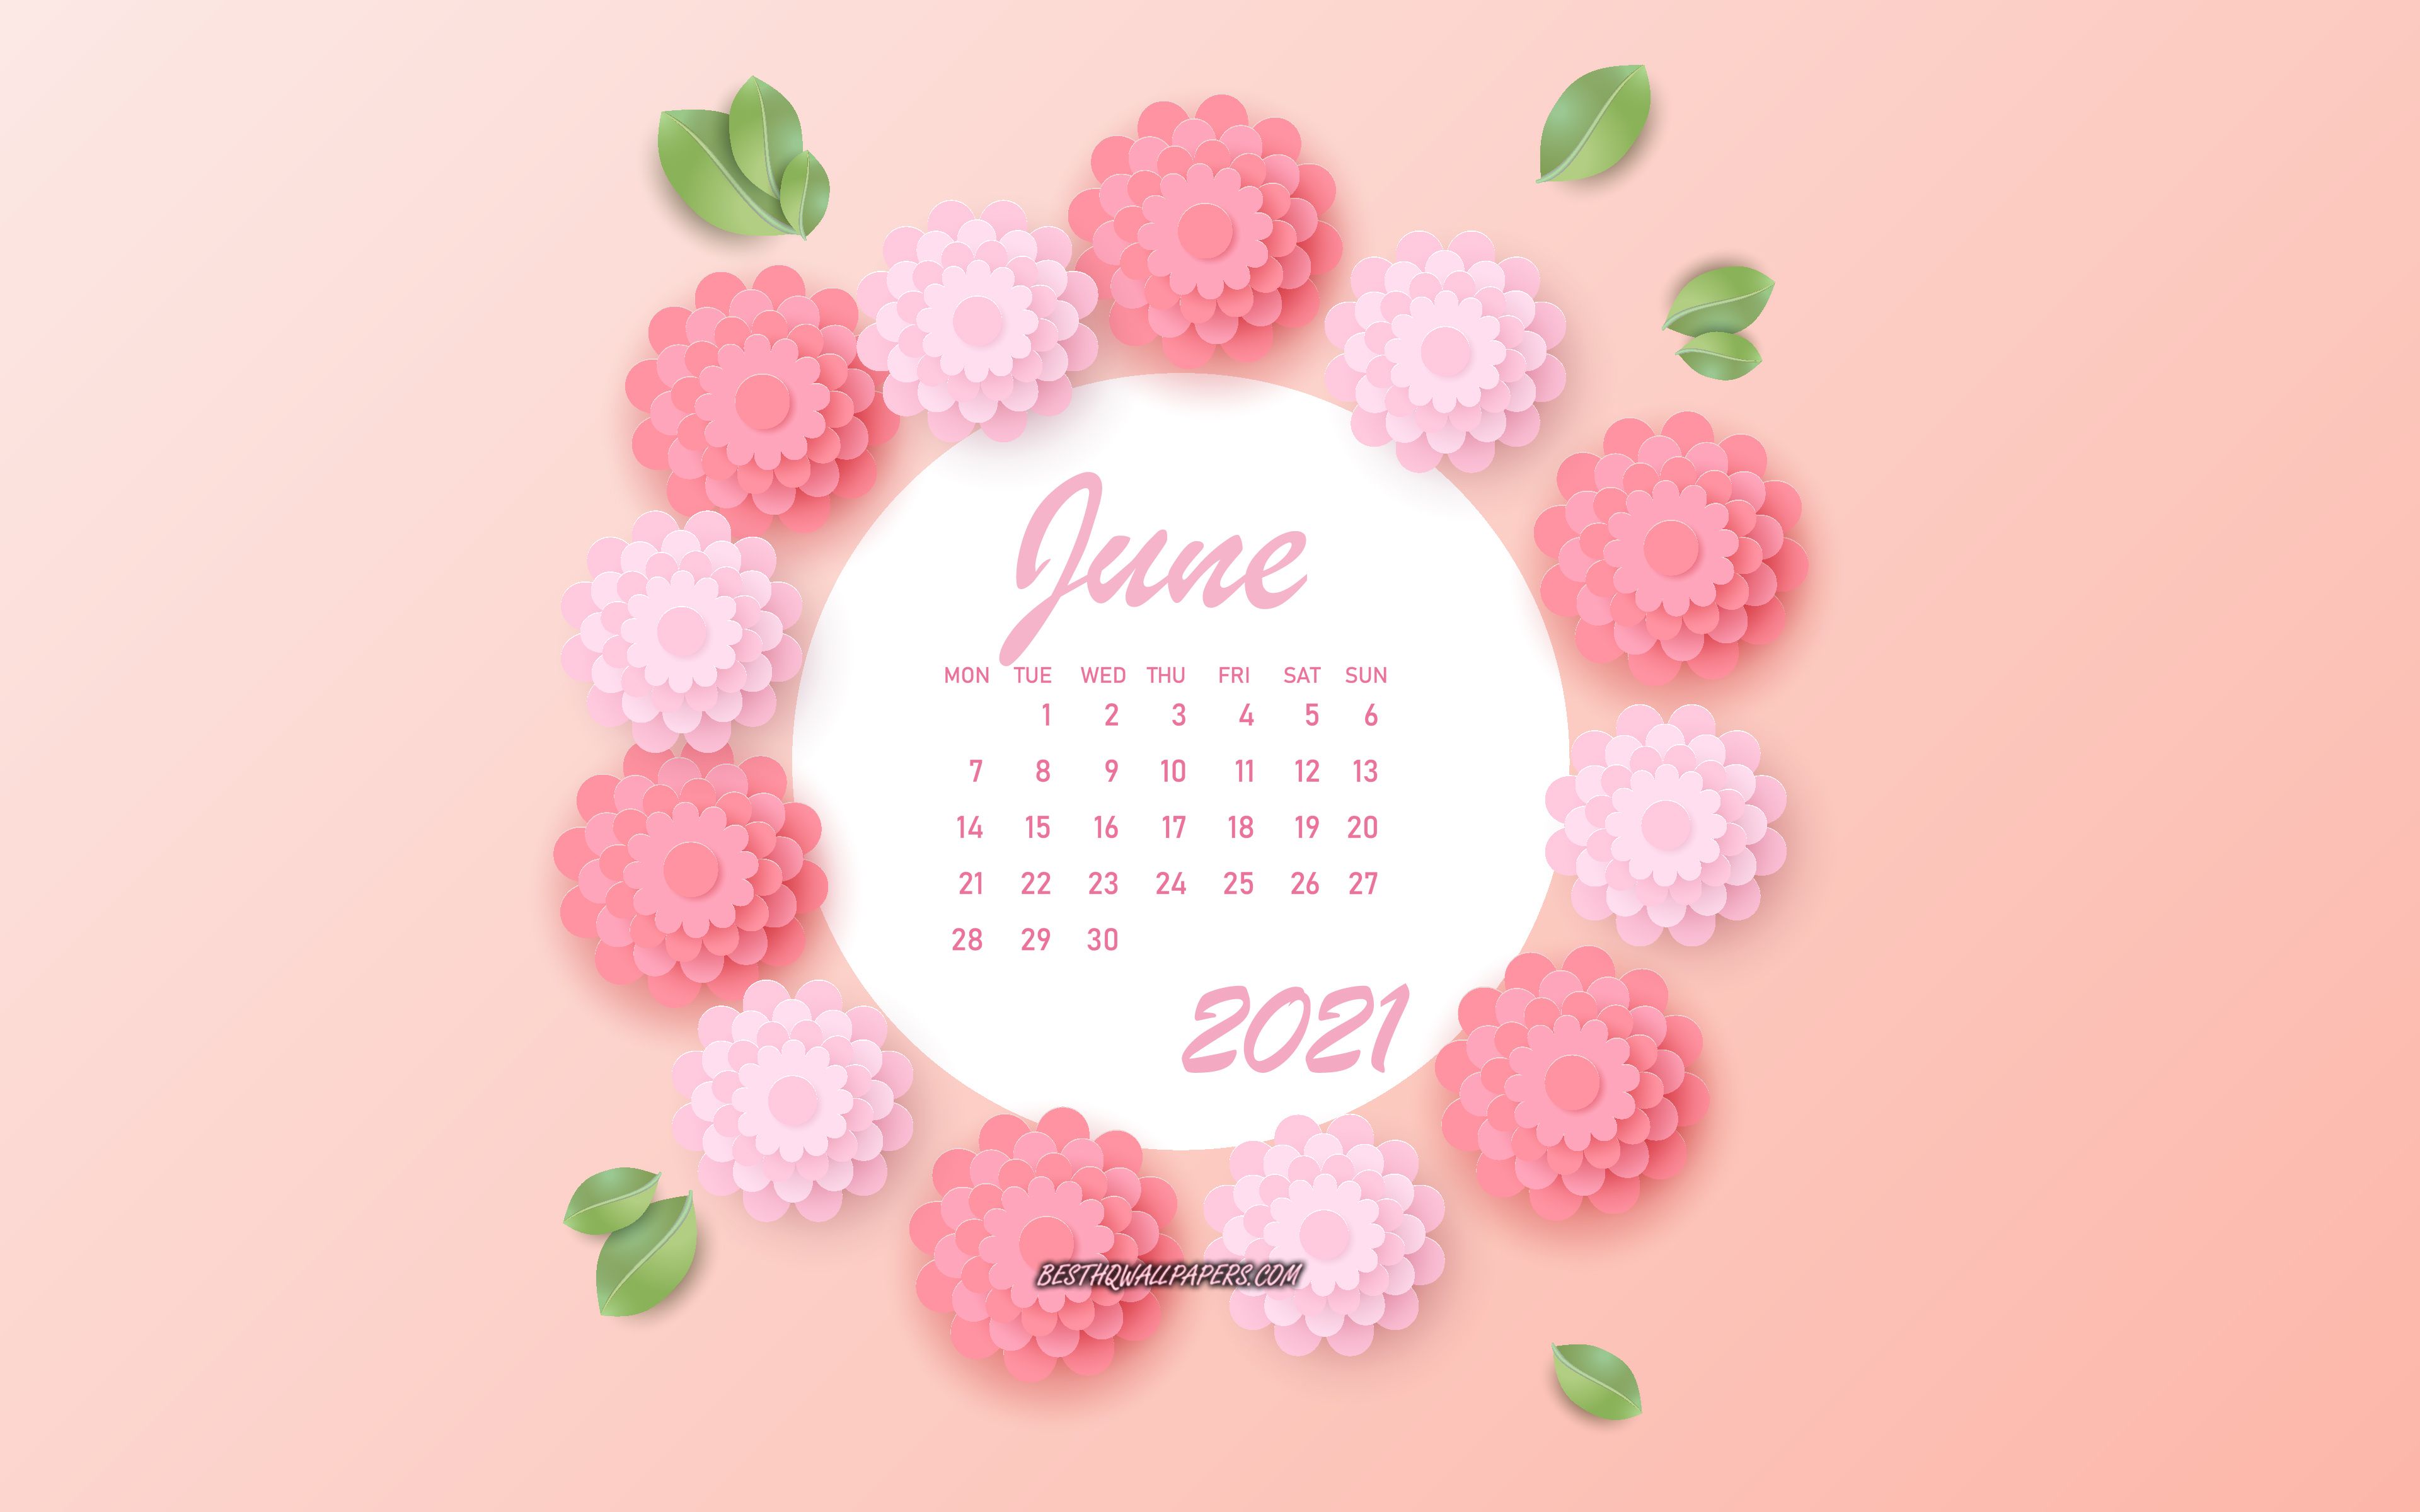 Download wallpaper June 2021 Calendar, 4k, pink flowers, June, 2021 summer calendars, 3D paper pink flowers, 2021 June Calendar for desktop with resolution 3840x2400. High Quality HD picture wallpaper